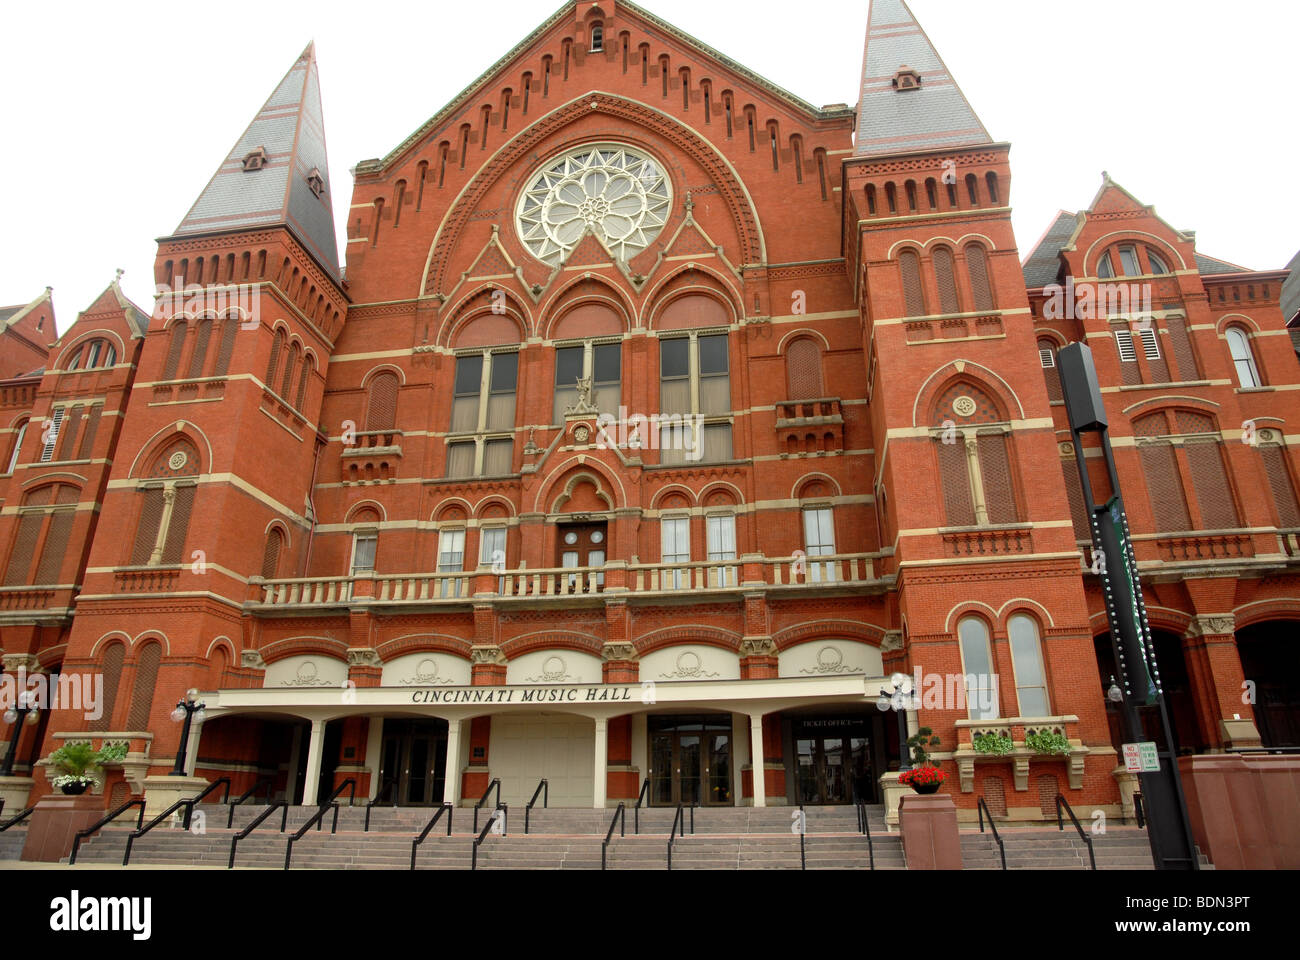 Cincinnati Music Hall High Resolution Stock Photography and Images - Alamy